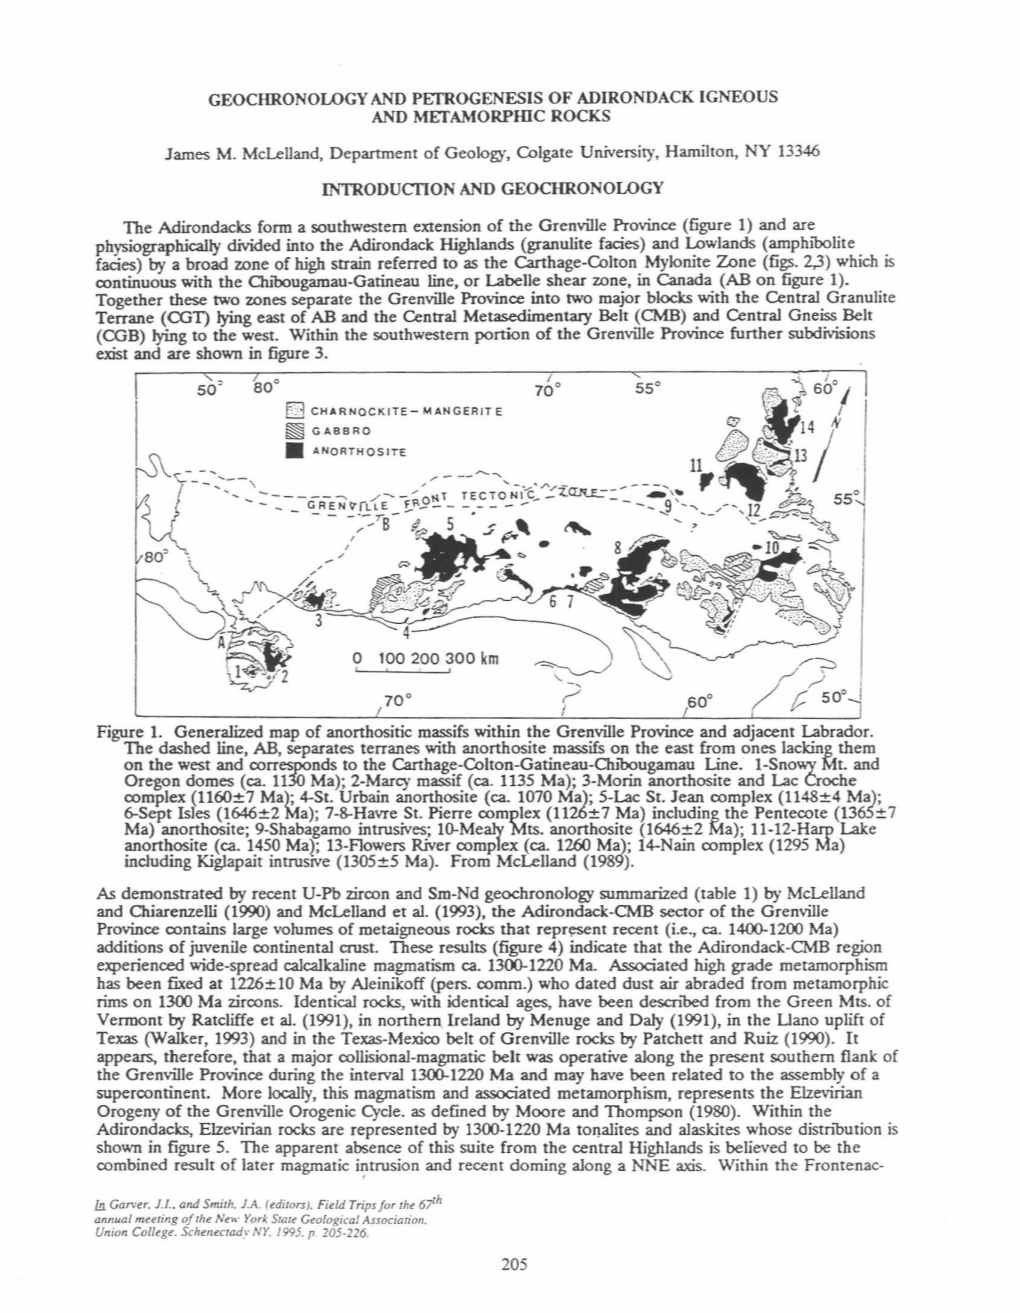 James M. Mclelland, Department of Geology, Colgate University, Hamilton, NY 13346 the Adirondacks Form a Southwestern Extension